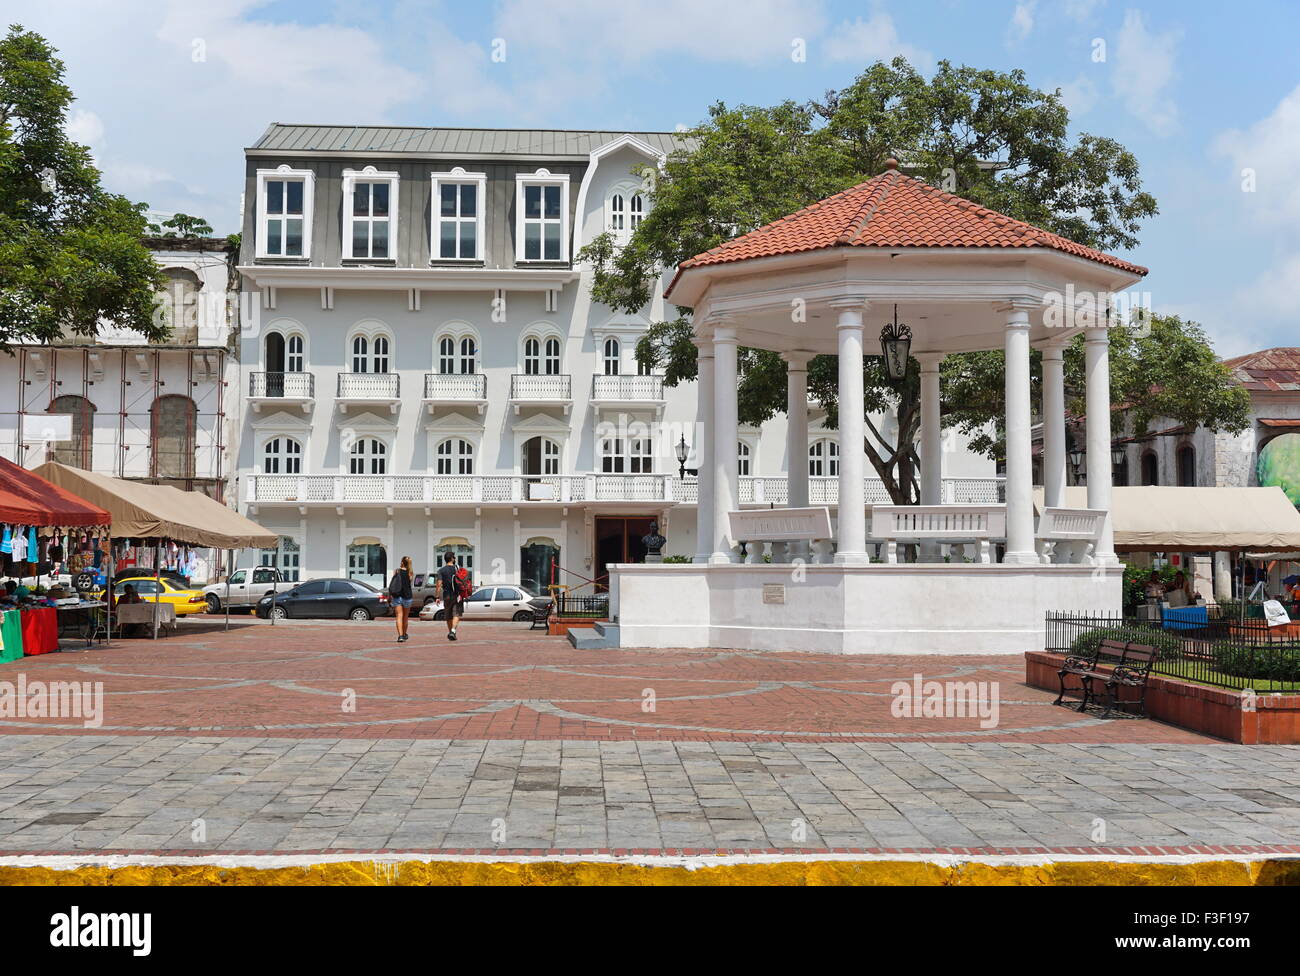 The Plaza de la Independencia and its gazebo in the Casco Viejo, the historic district of Panama City, Panama, Central America Stock Photo